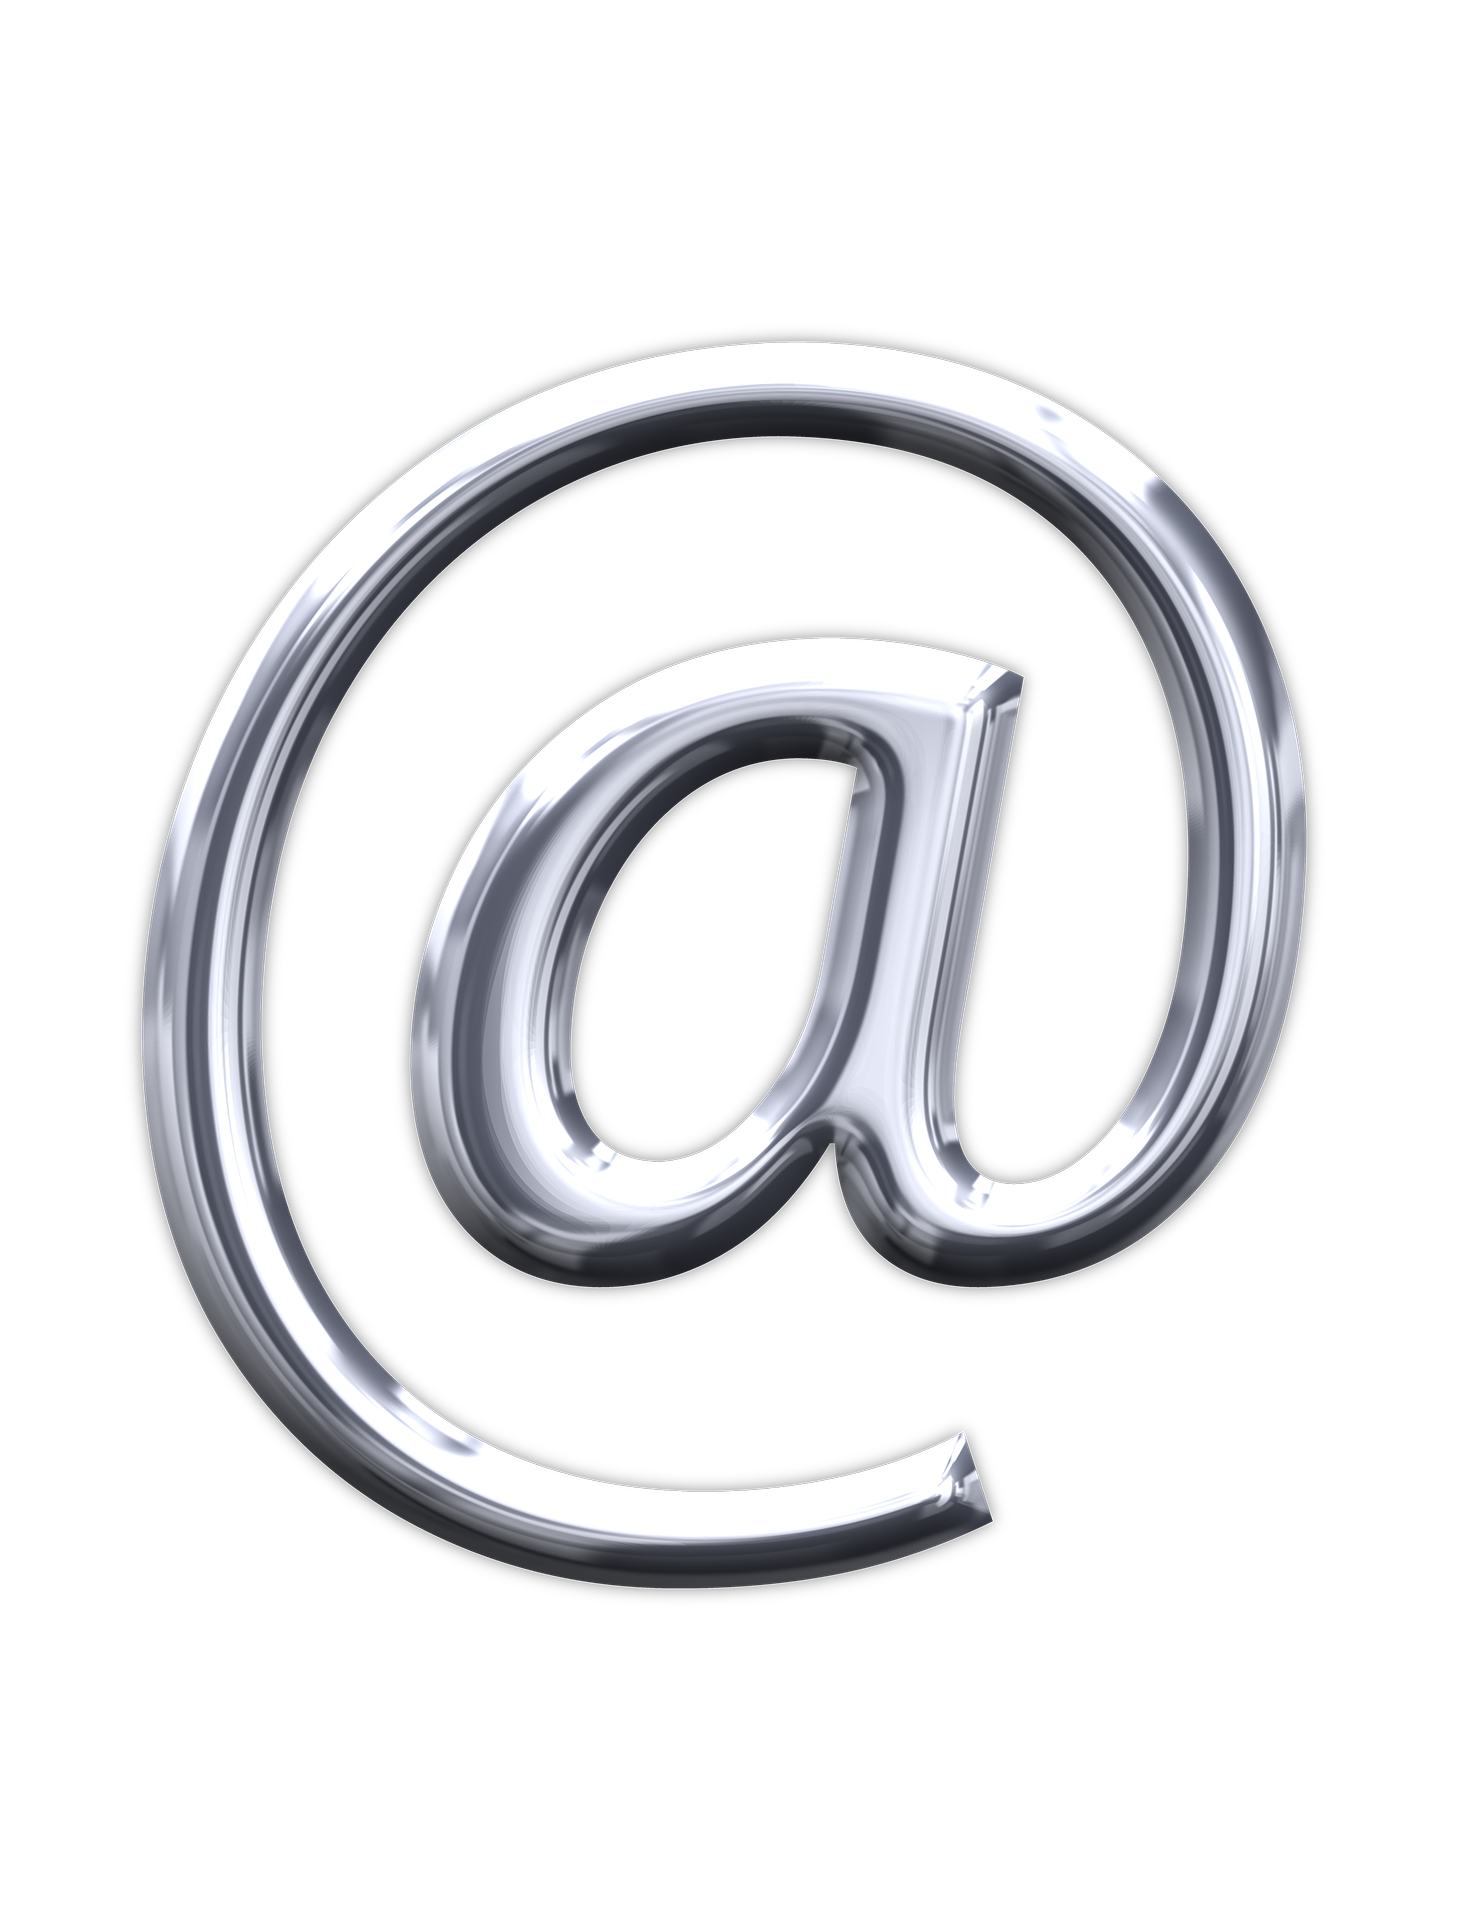 Email Sign, 3d, Communicate, Digital, E-mail, HQ Photo